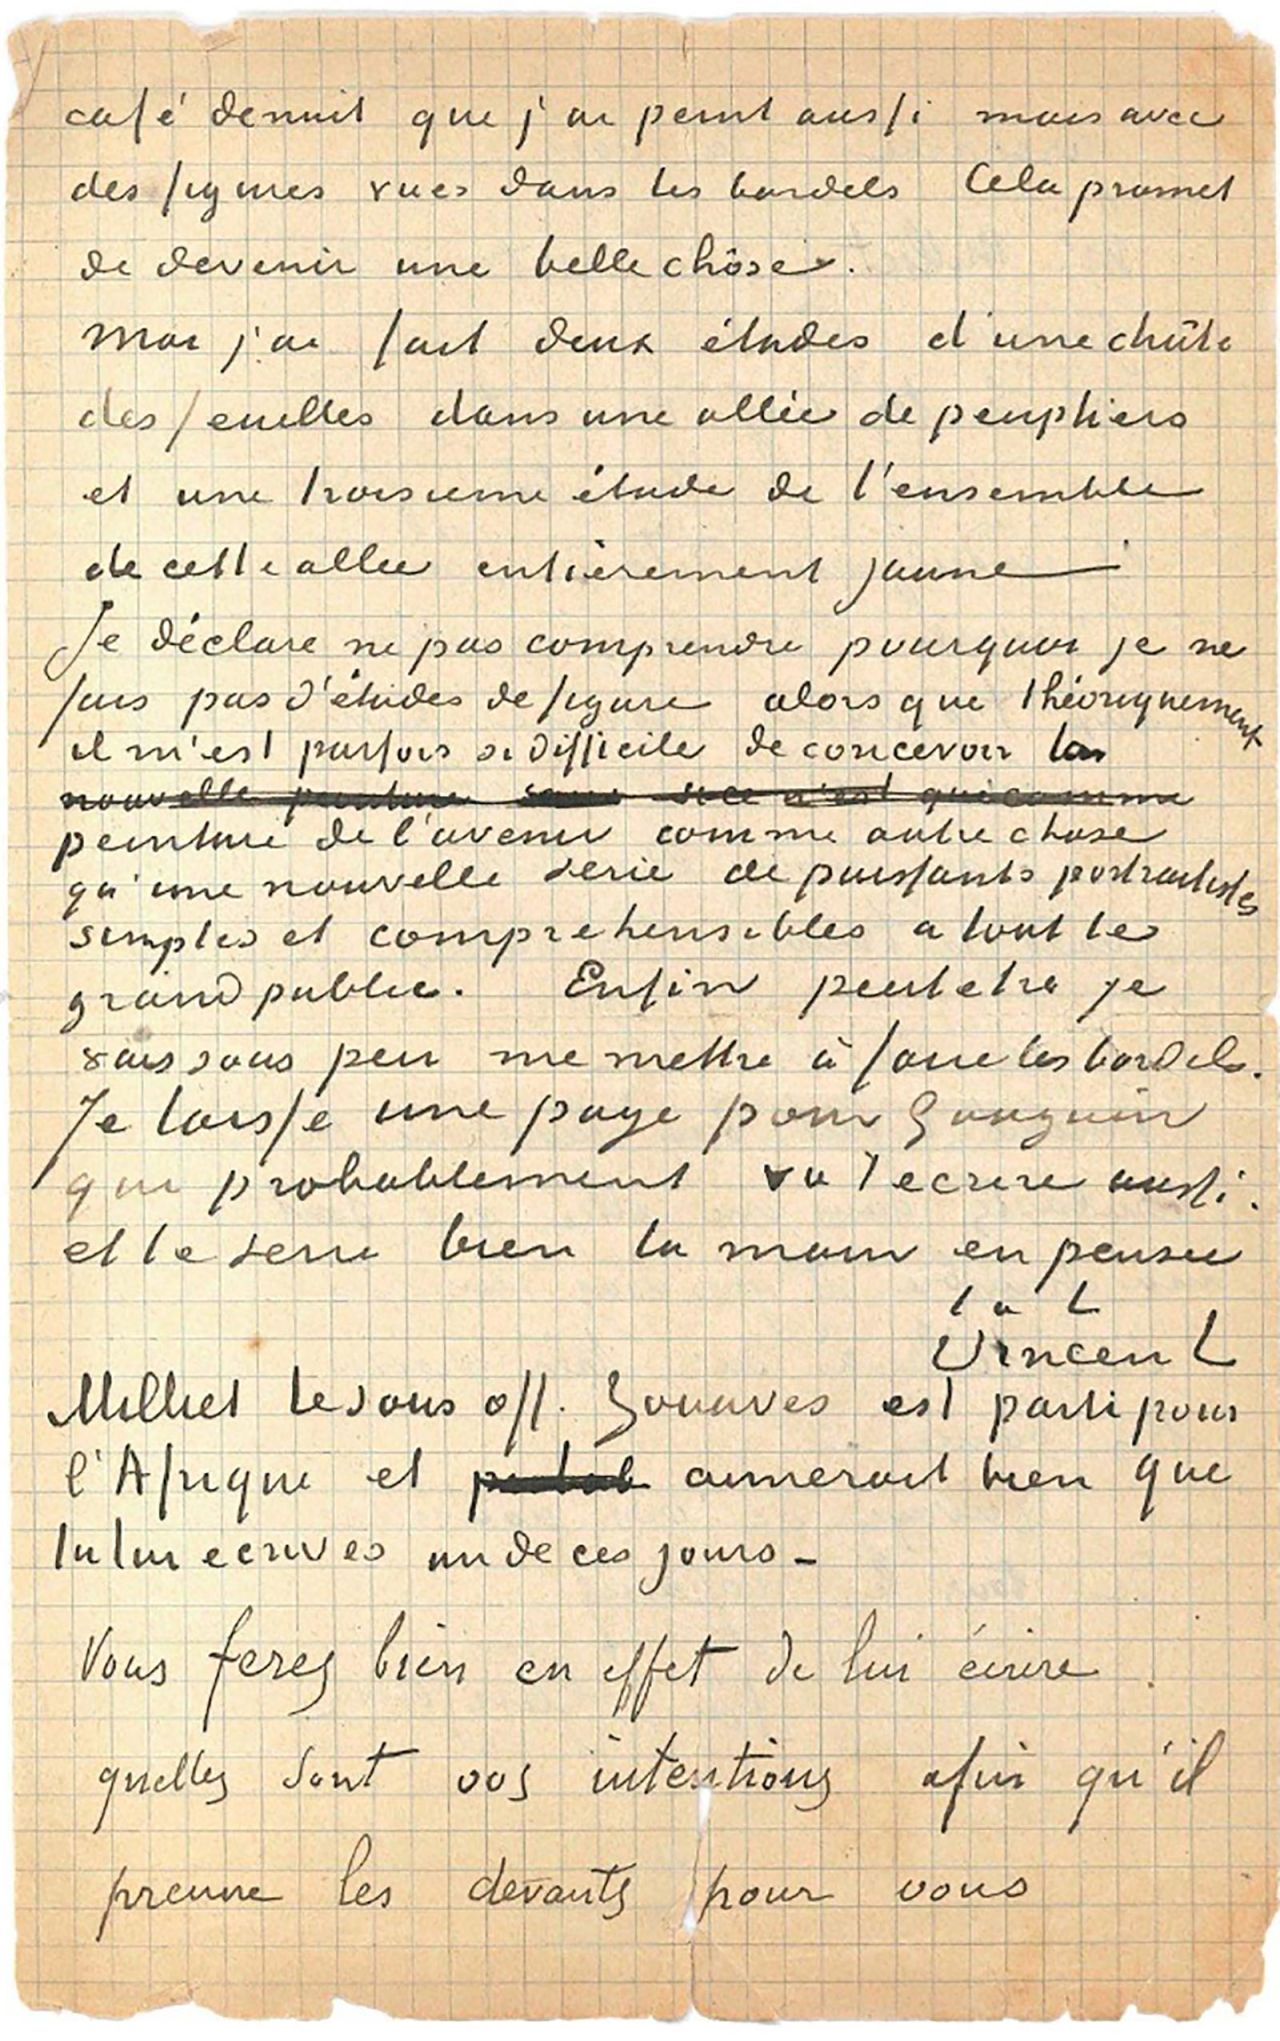 Vincent Van Gogh and Paul Gauguin's letter to Émile Bernard (November 1888)